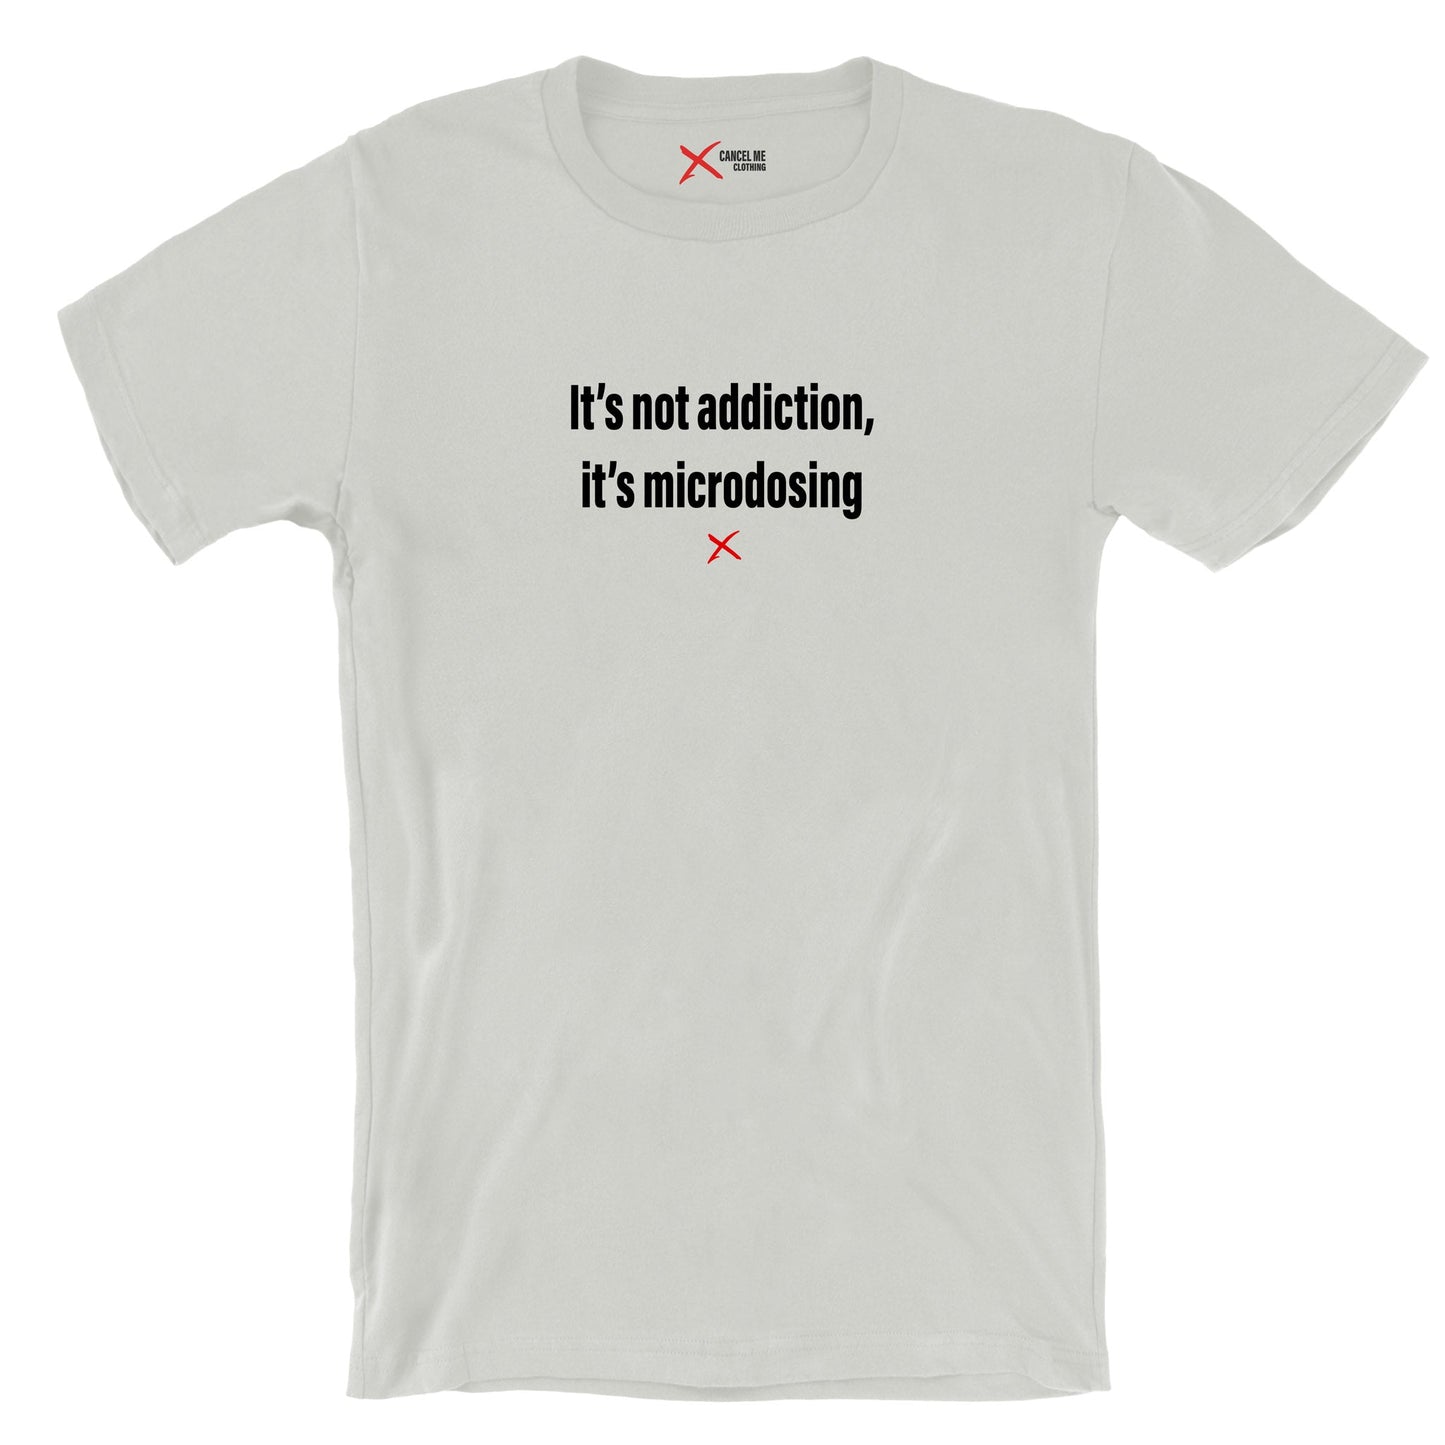 It's not addiction, it's microdosing - Shirt